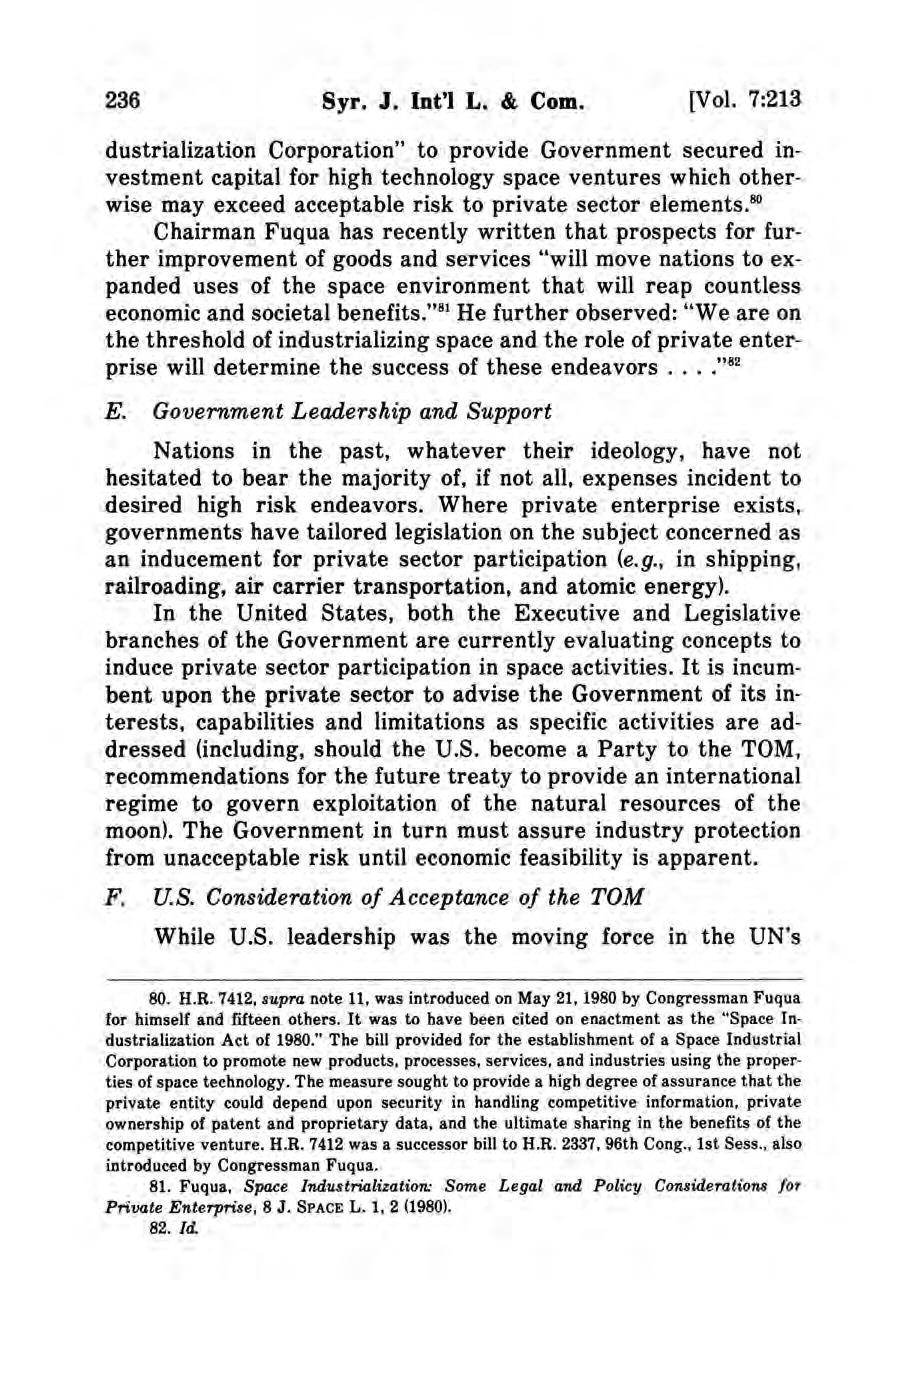 Syracuse Journal of International Law and Commerce, Vol. 7, No. 2 [1980], Art. 6 236 Syr. J. Int'l L. & Com. [Vol.